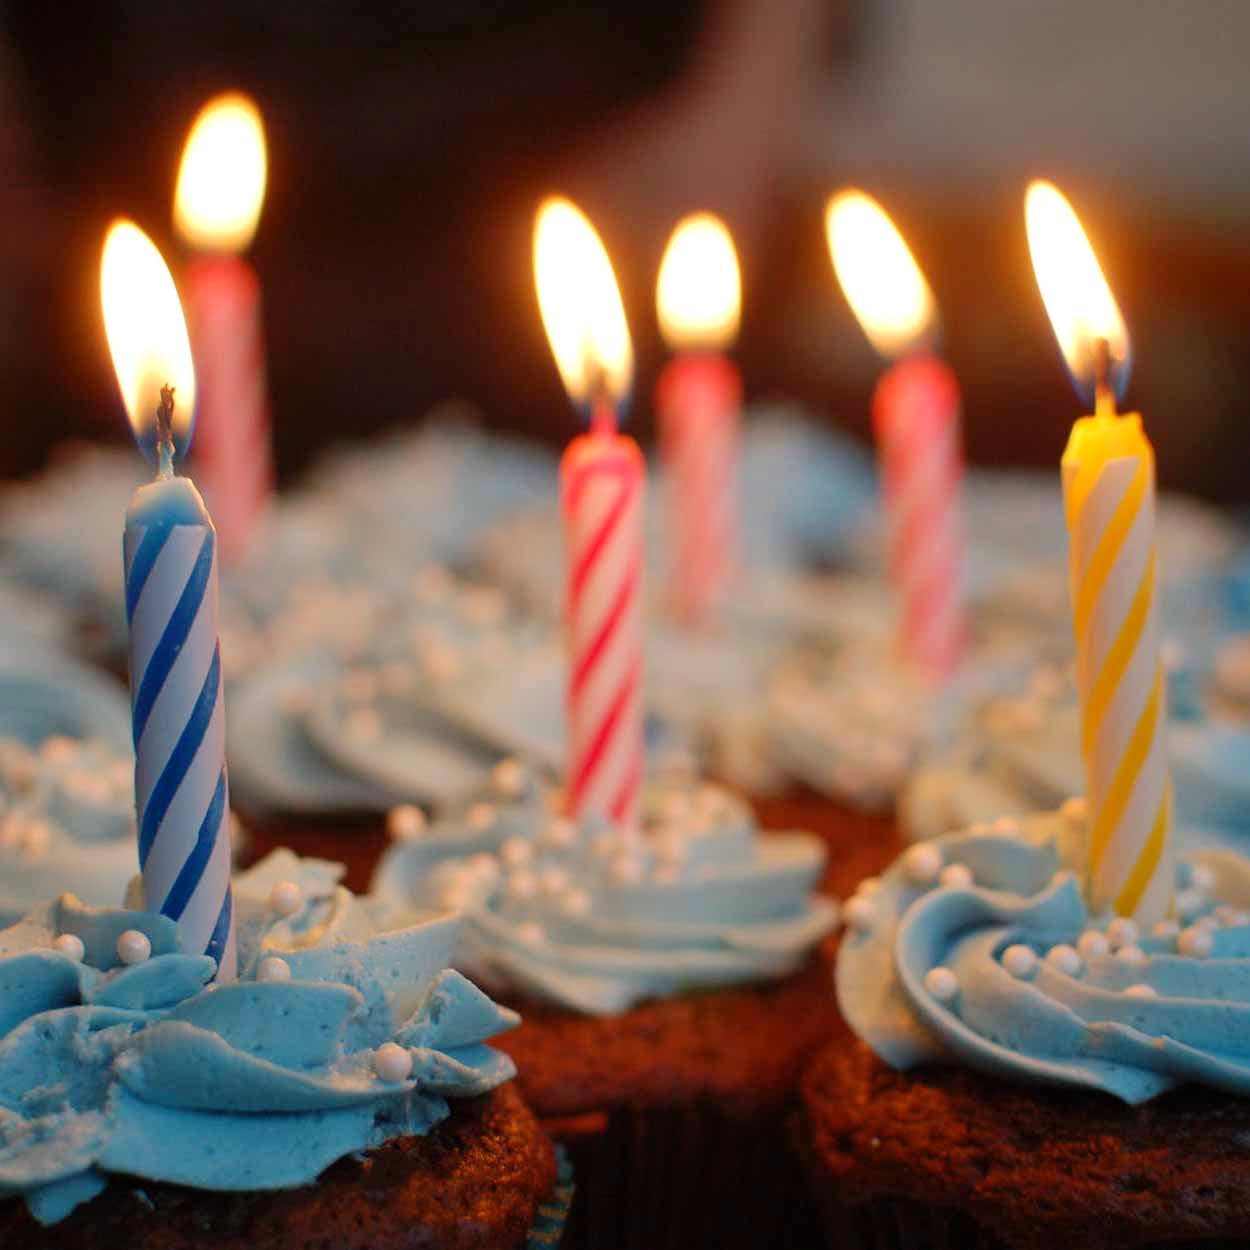 Candle,Cake,Birthday cake,Lighting,Birthday candle,Birthday,Baked goods,Icing,Dessert,Food